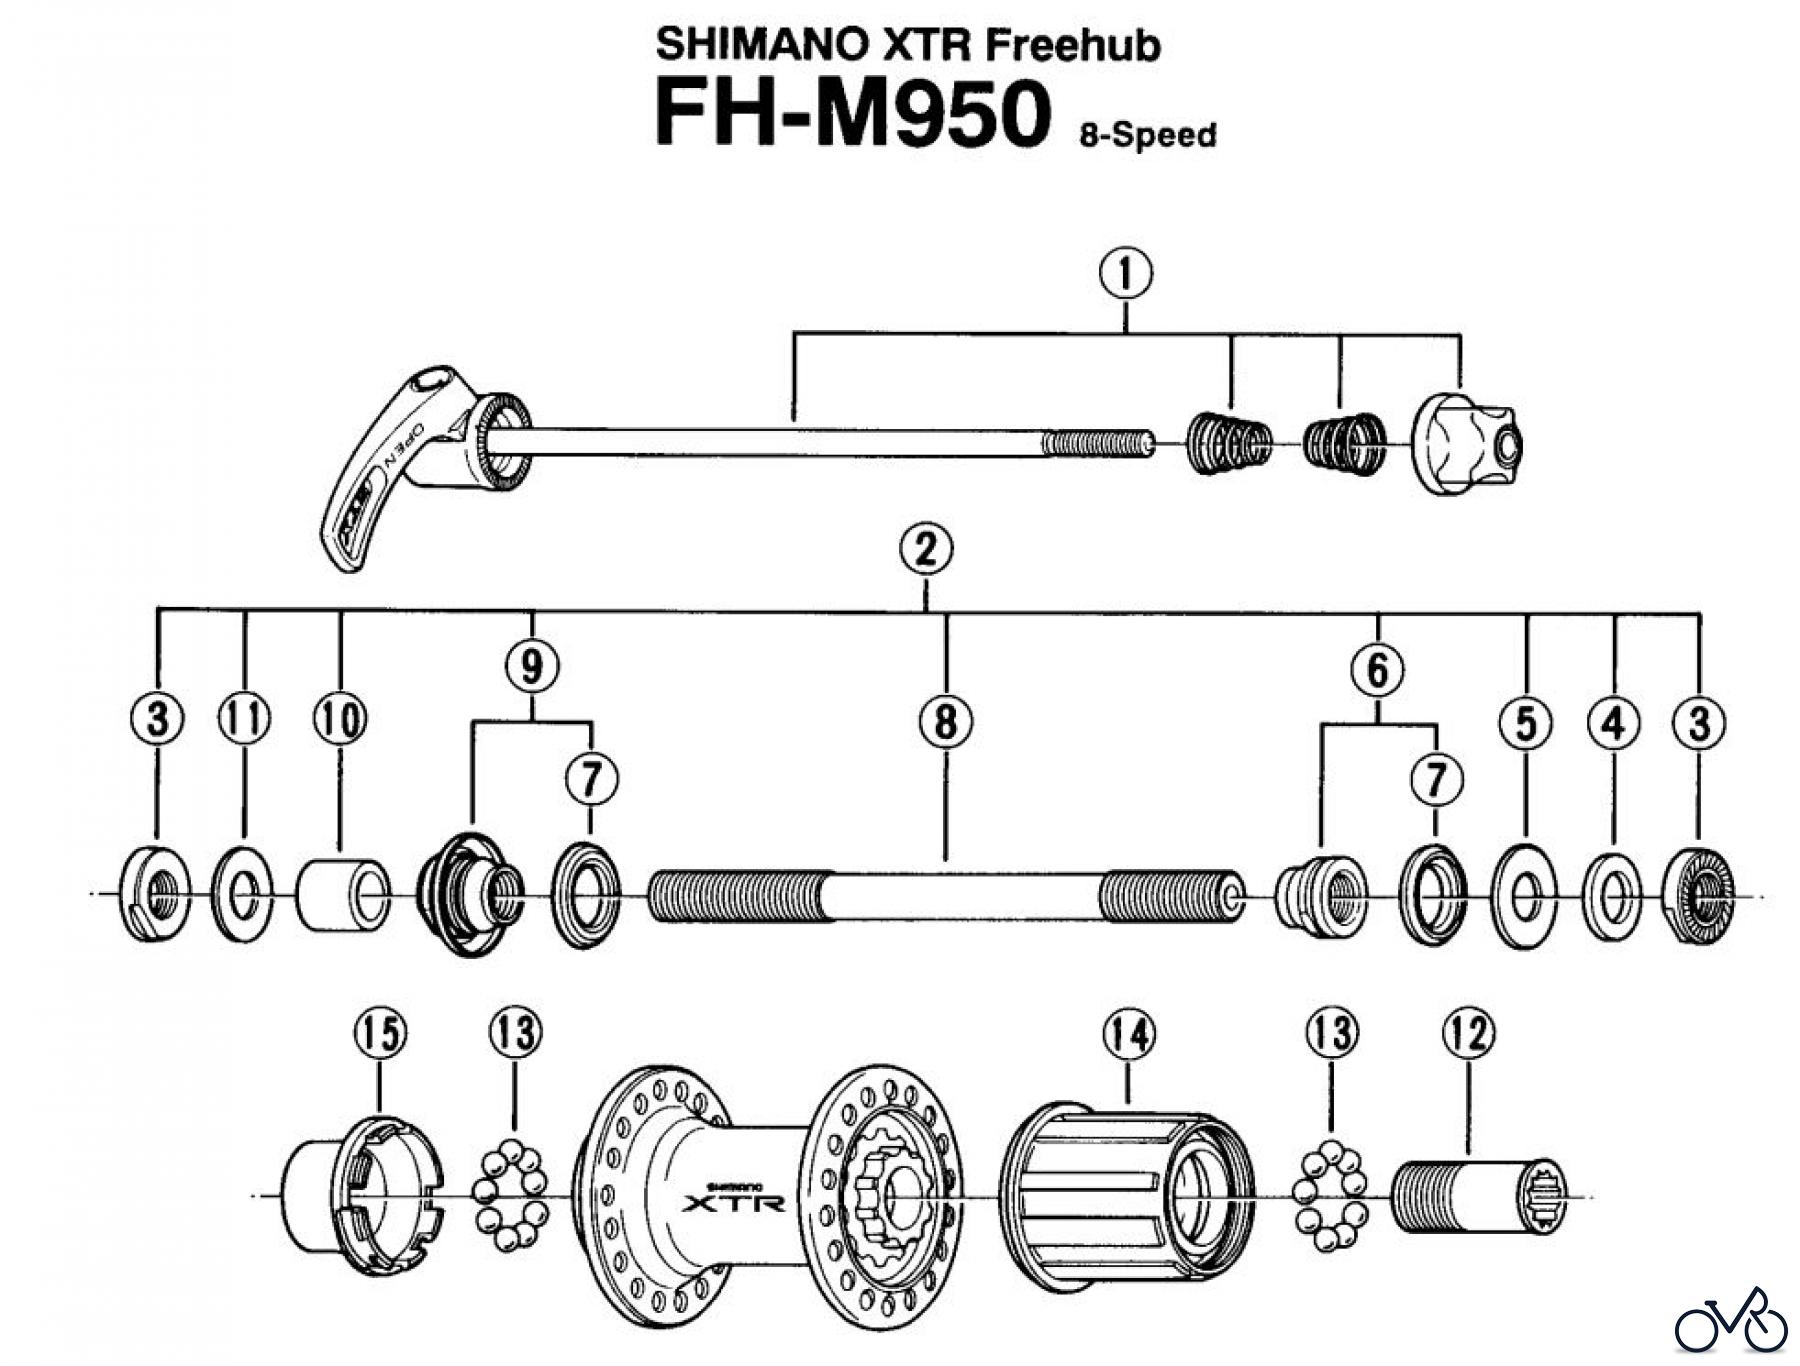  Shimano FH Free Hub - Freilaufnabe FH-M950 Shimano XTR 8-fach